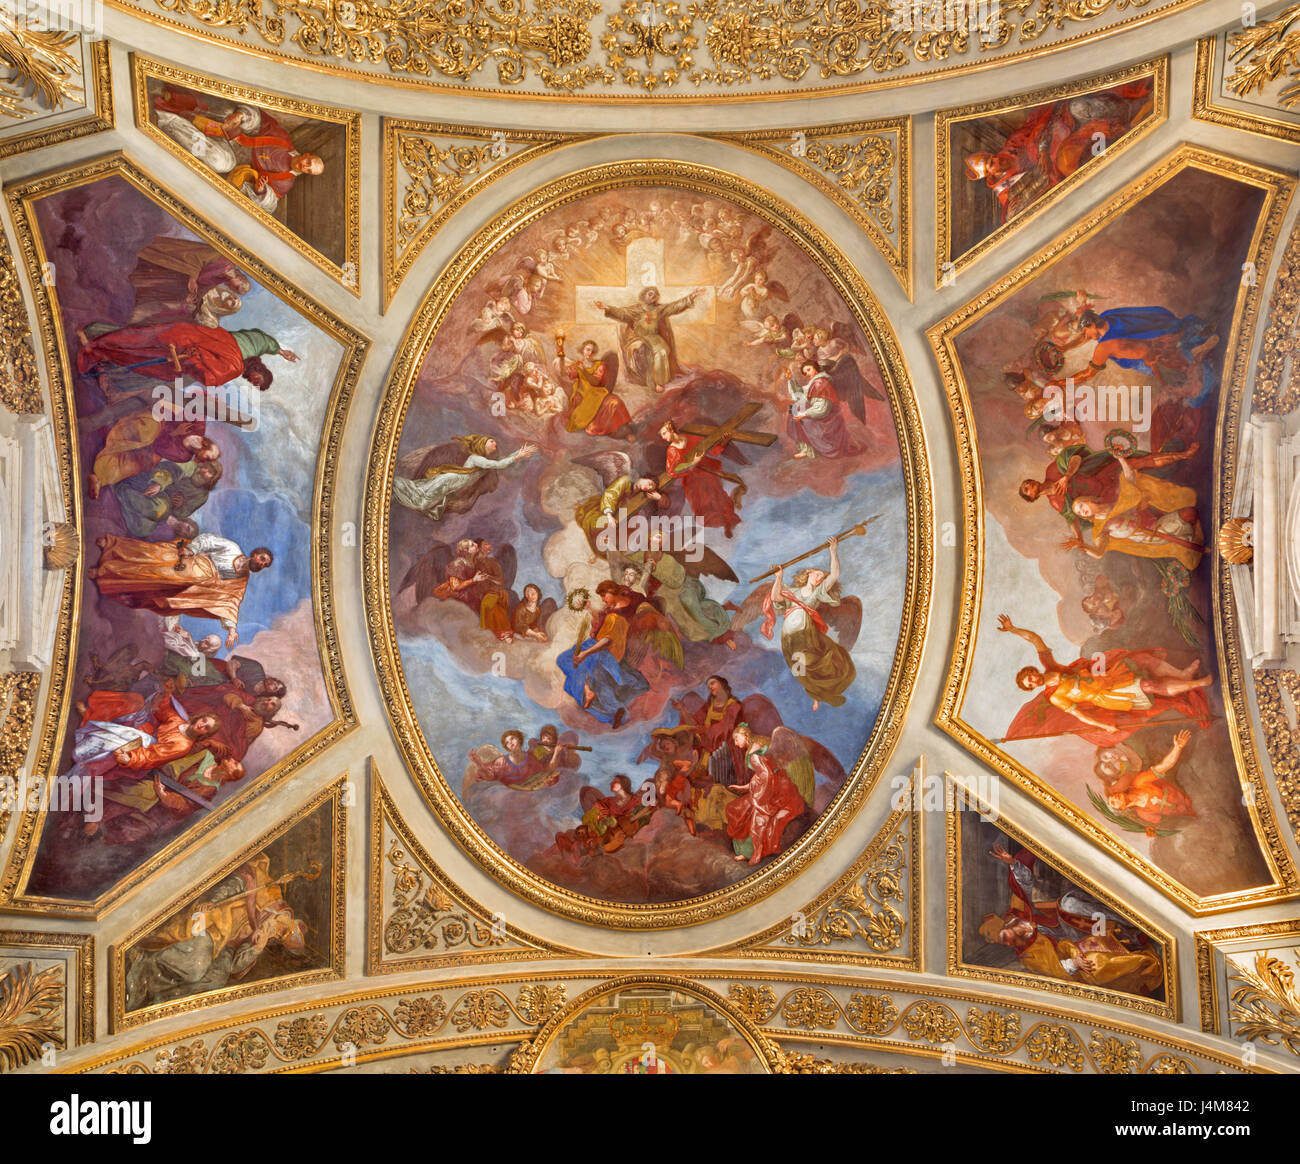 TURIN, ITALY - MARCH 14, 2017: The ceiling fresco of Jesus Christ in his Glory in church Chiesa dei Santi Martiri by Pellegrino Tibaldi (1527 – 1596). Stock Photo